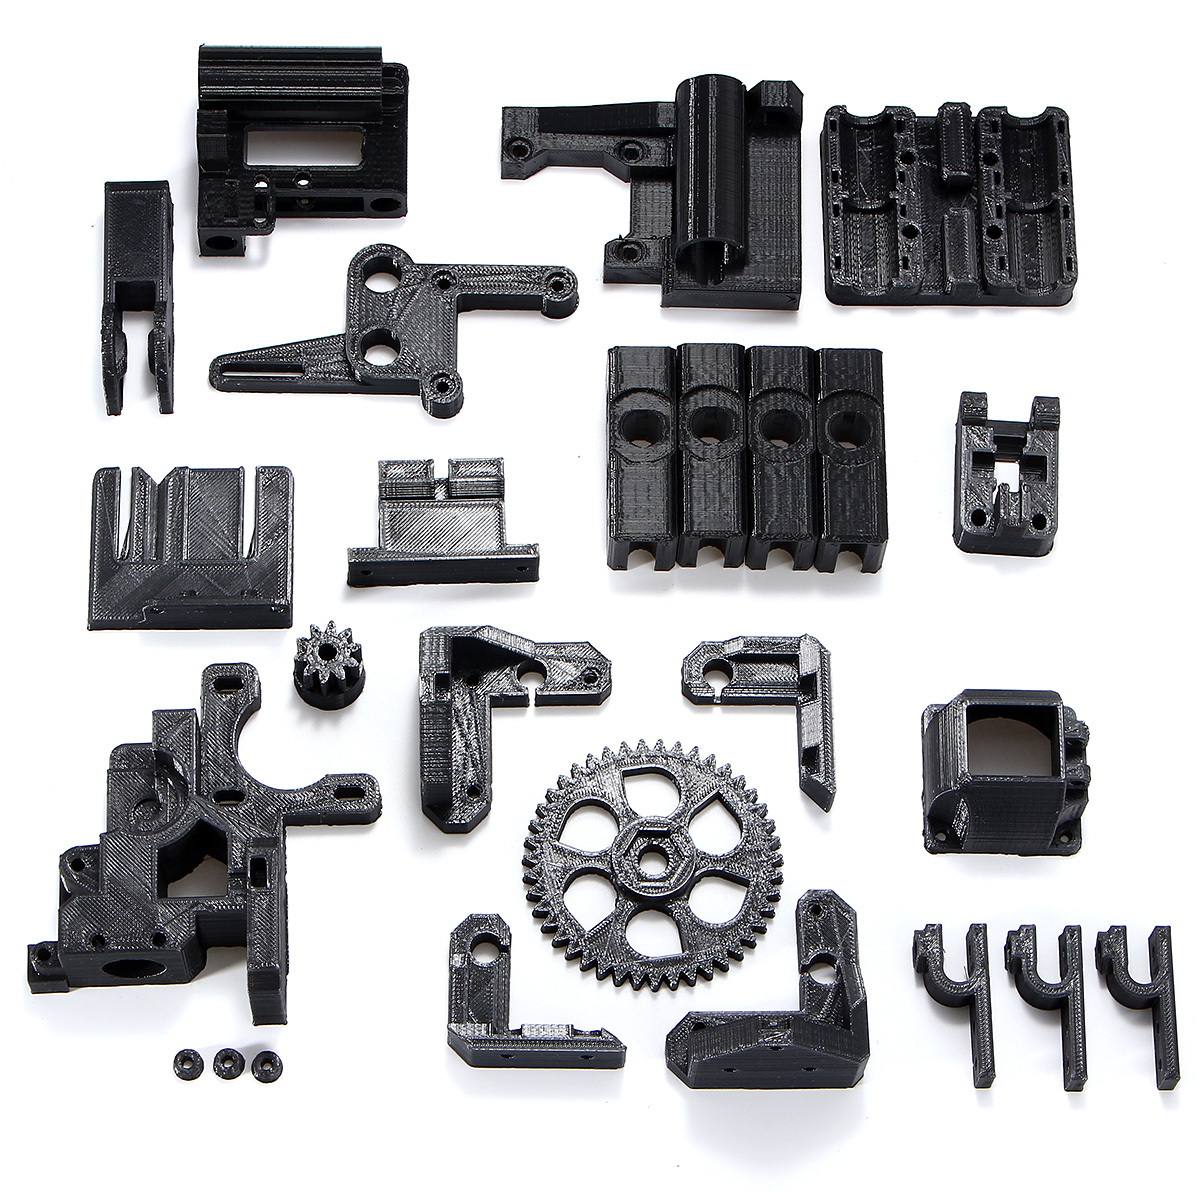 Black ABS Filament Black 3D Printed Accessories Parts DIY Kit For RepRap Prusa i3 3D Printer 2